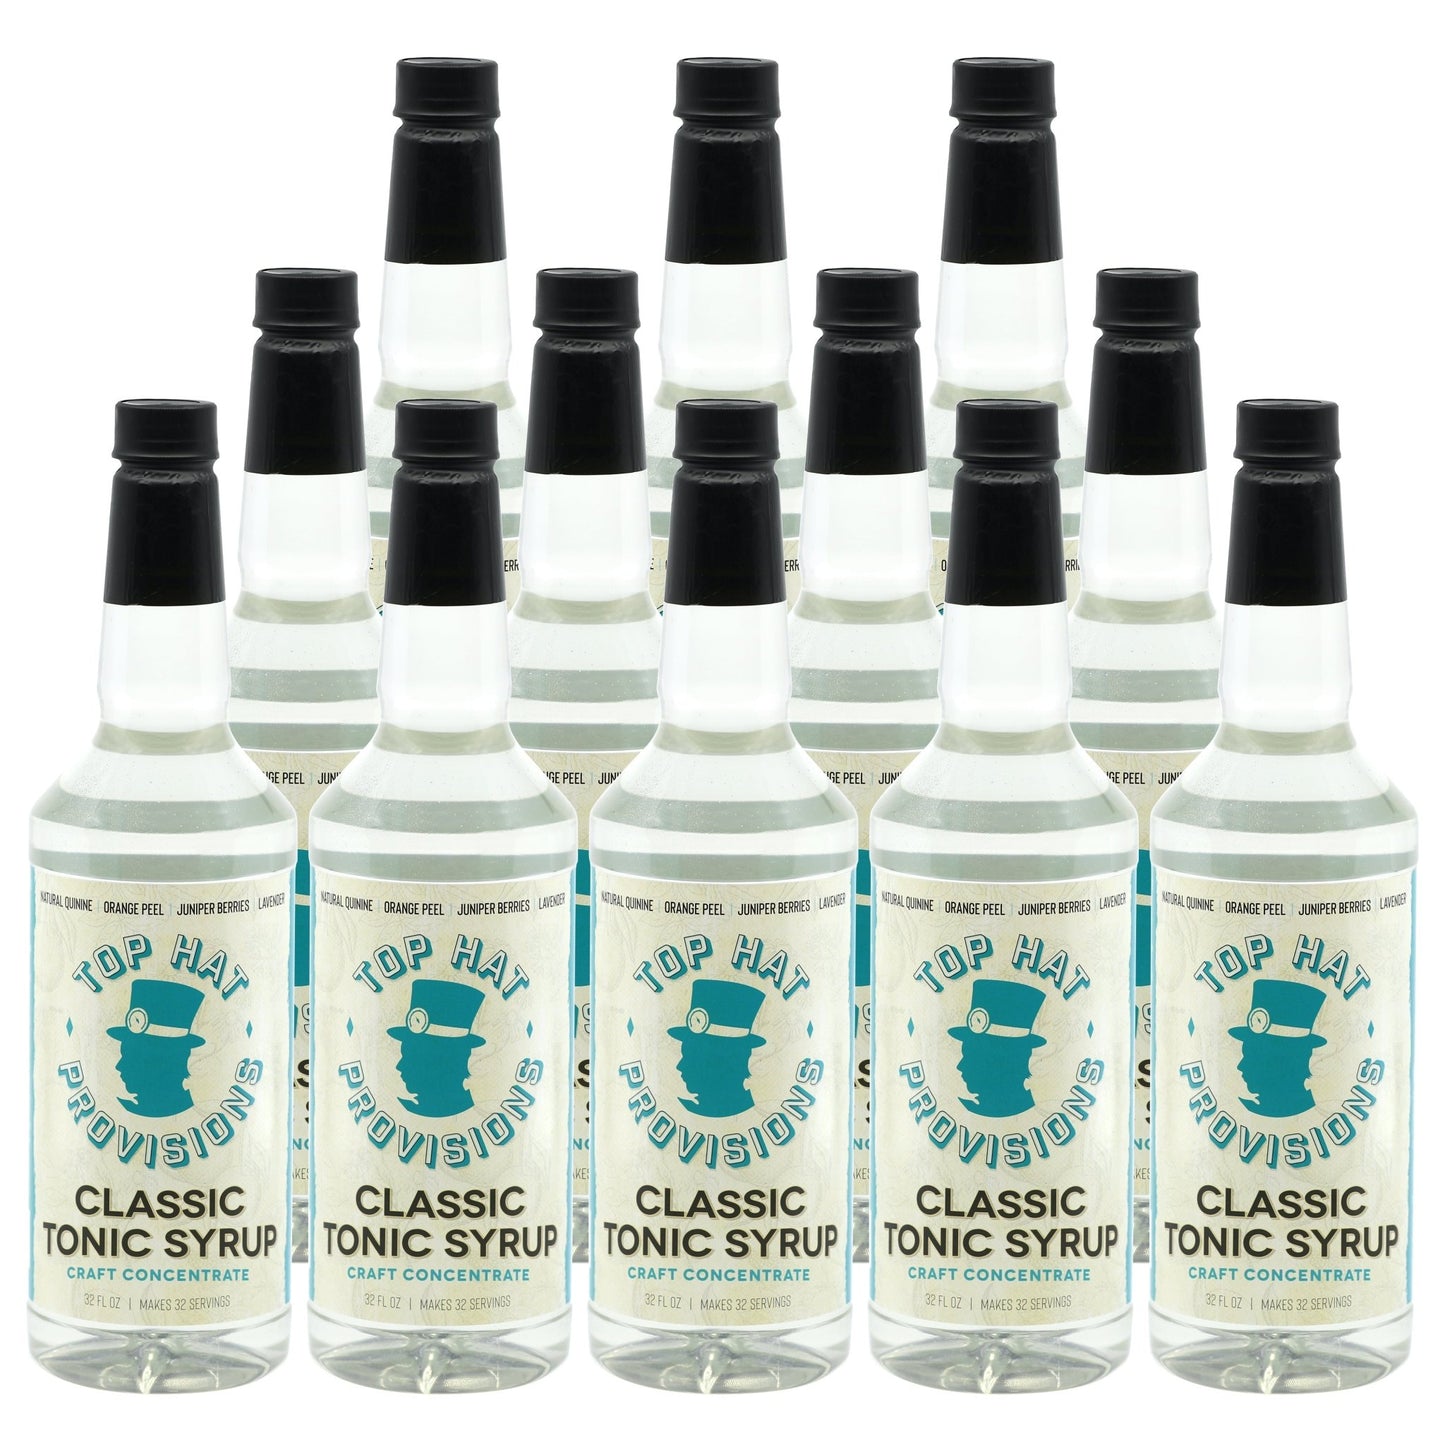 Top Hat Classic Tonic Syrup & 5x Premium Quinine Concentrate - 32oz Bottle - Groove Rabbit